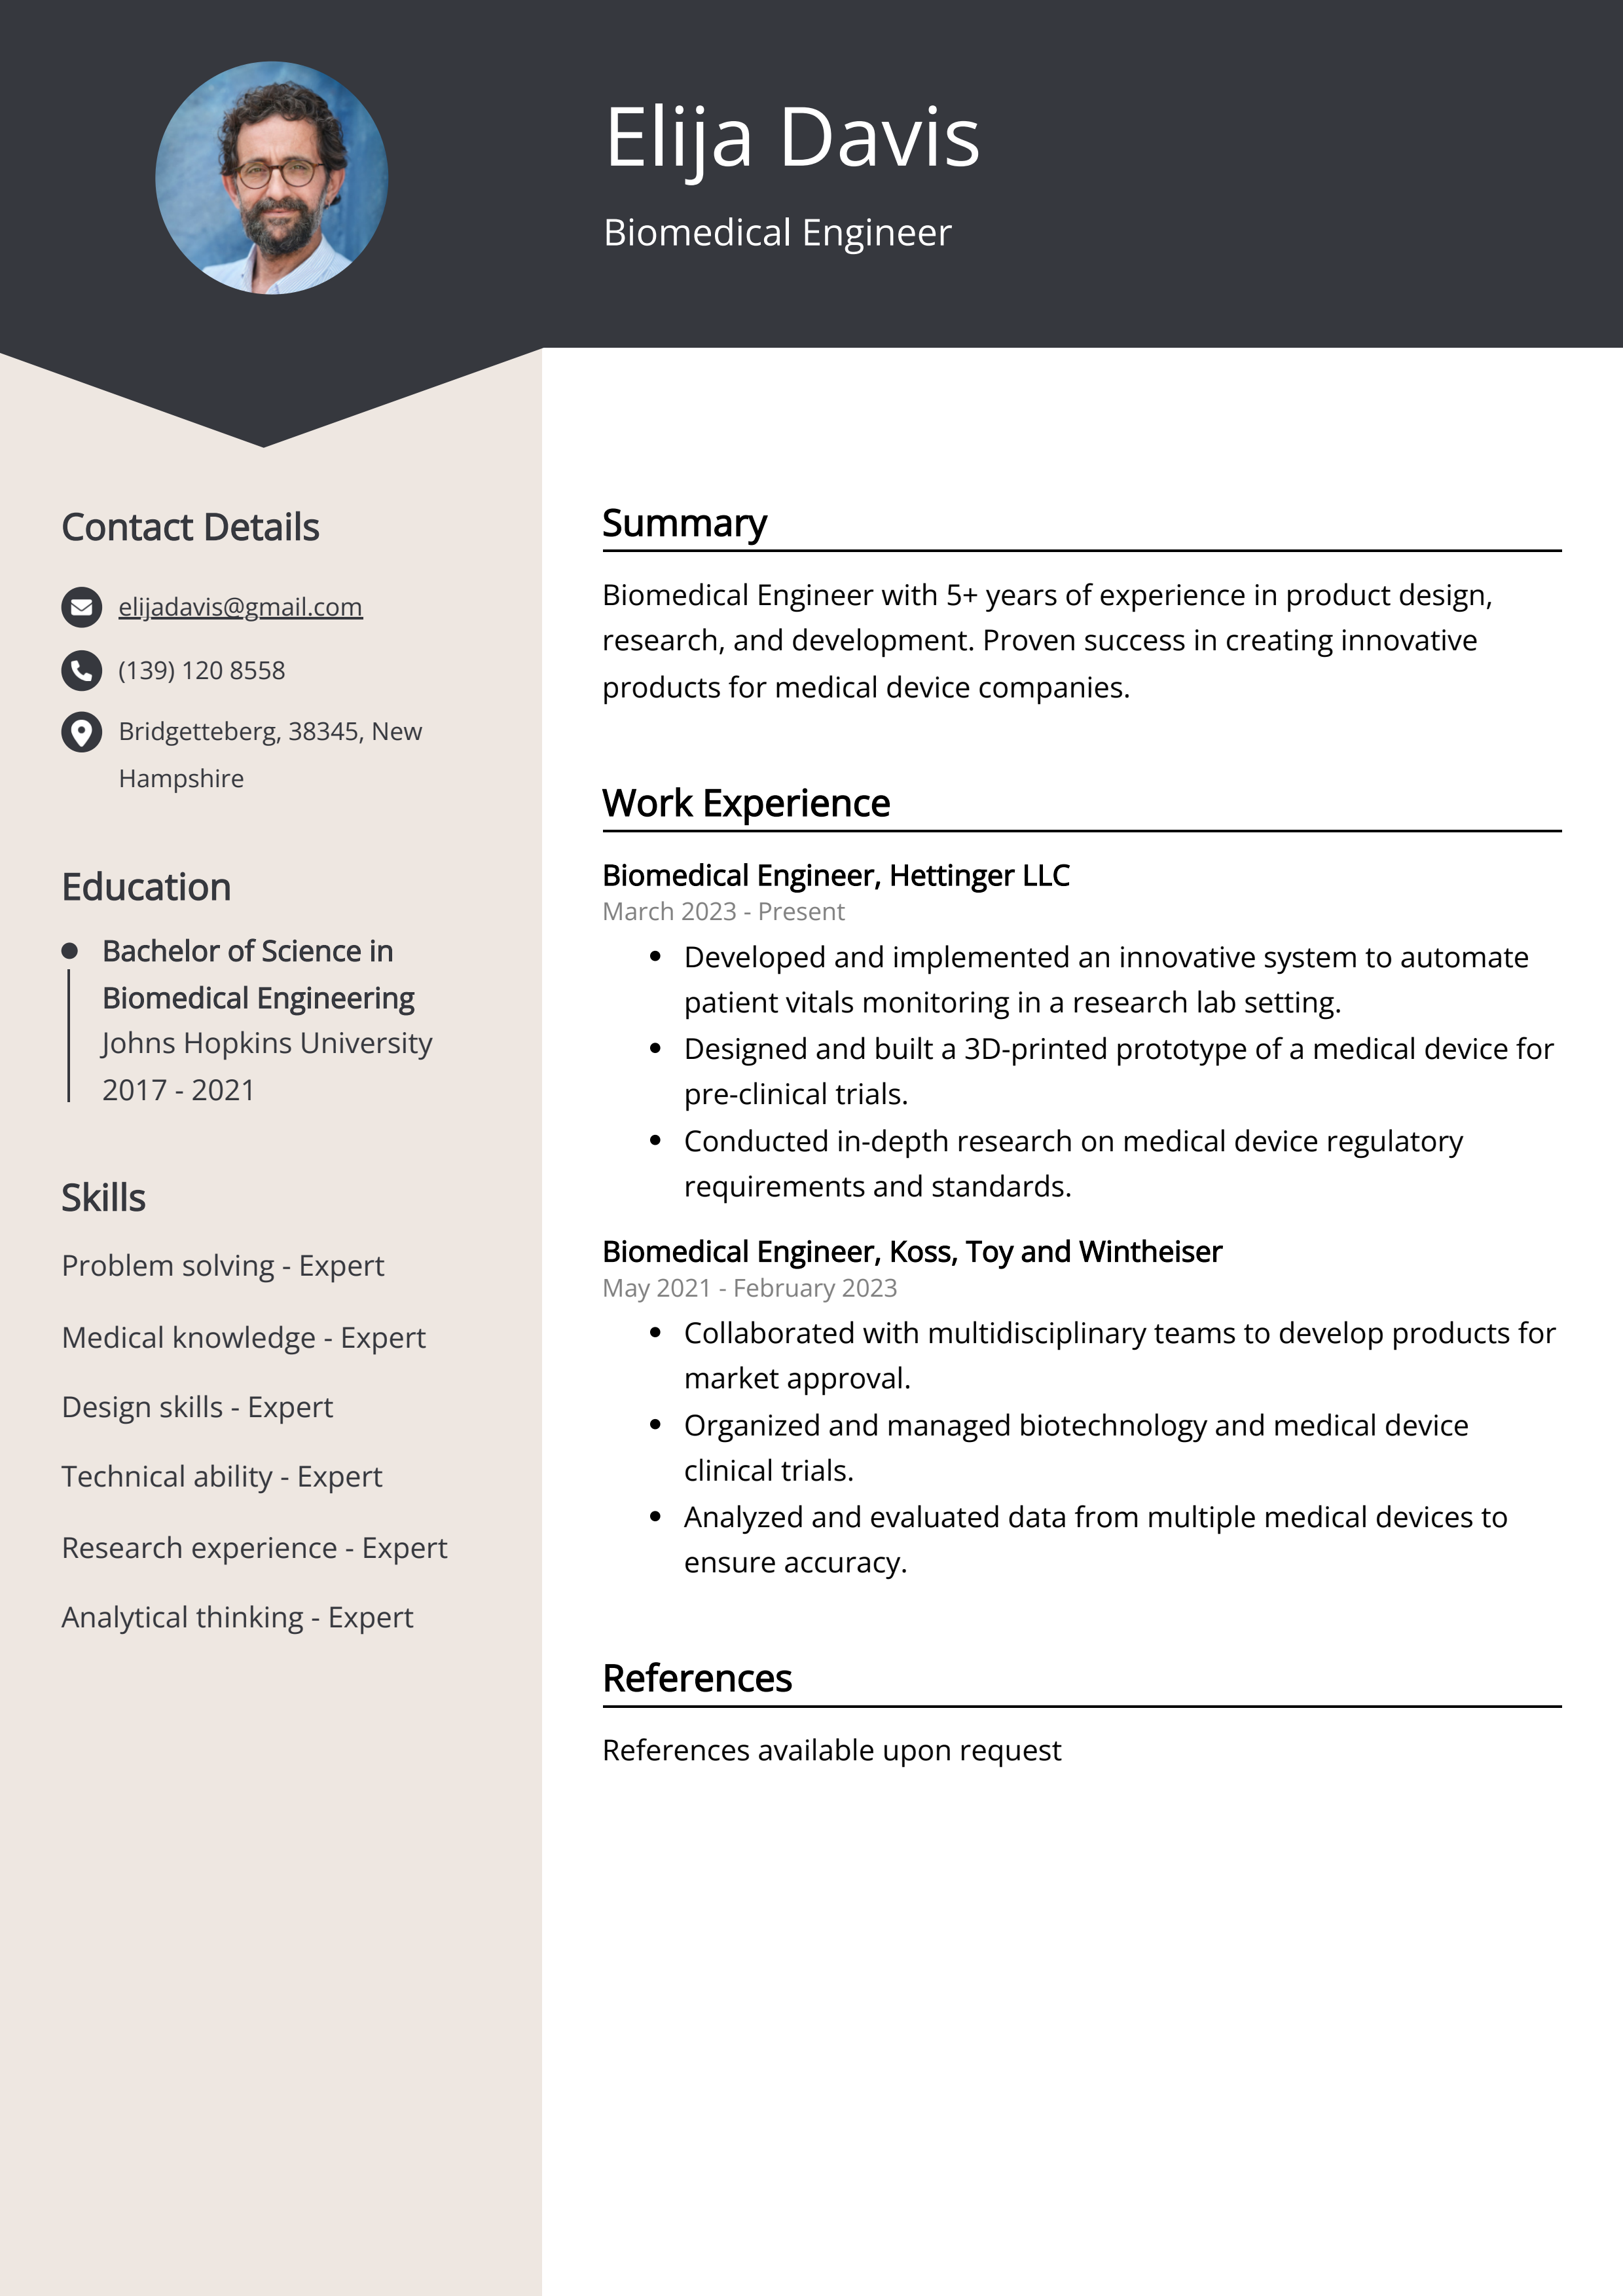 Biomedical Engineer CV Example